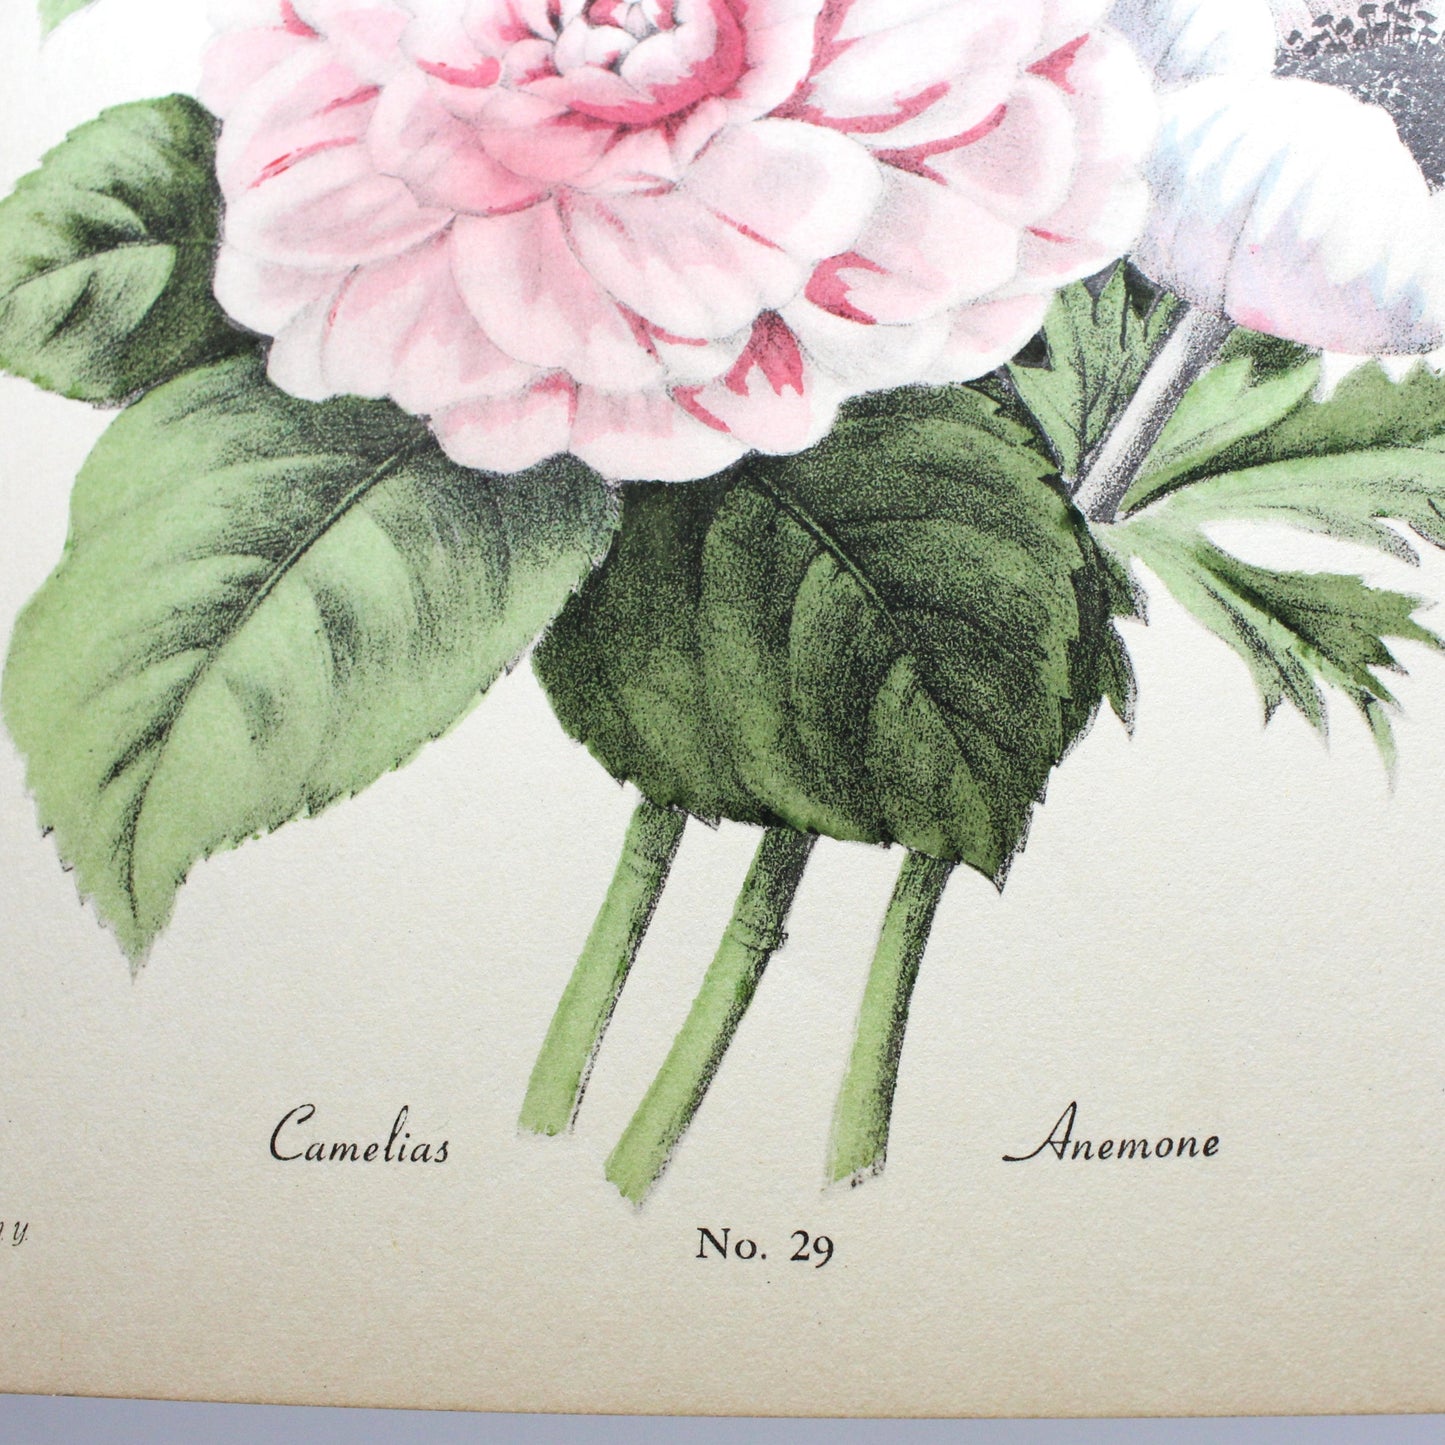 Print, Botanical Camelias and Anemone Print, Chirat, 29, Vintage